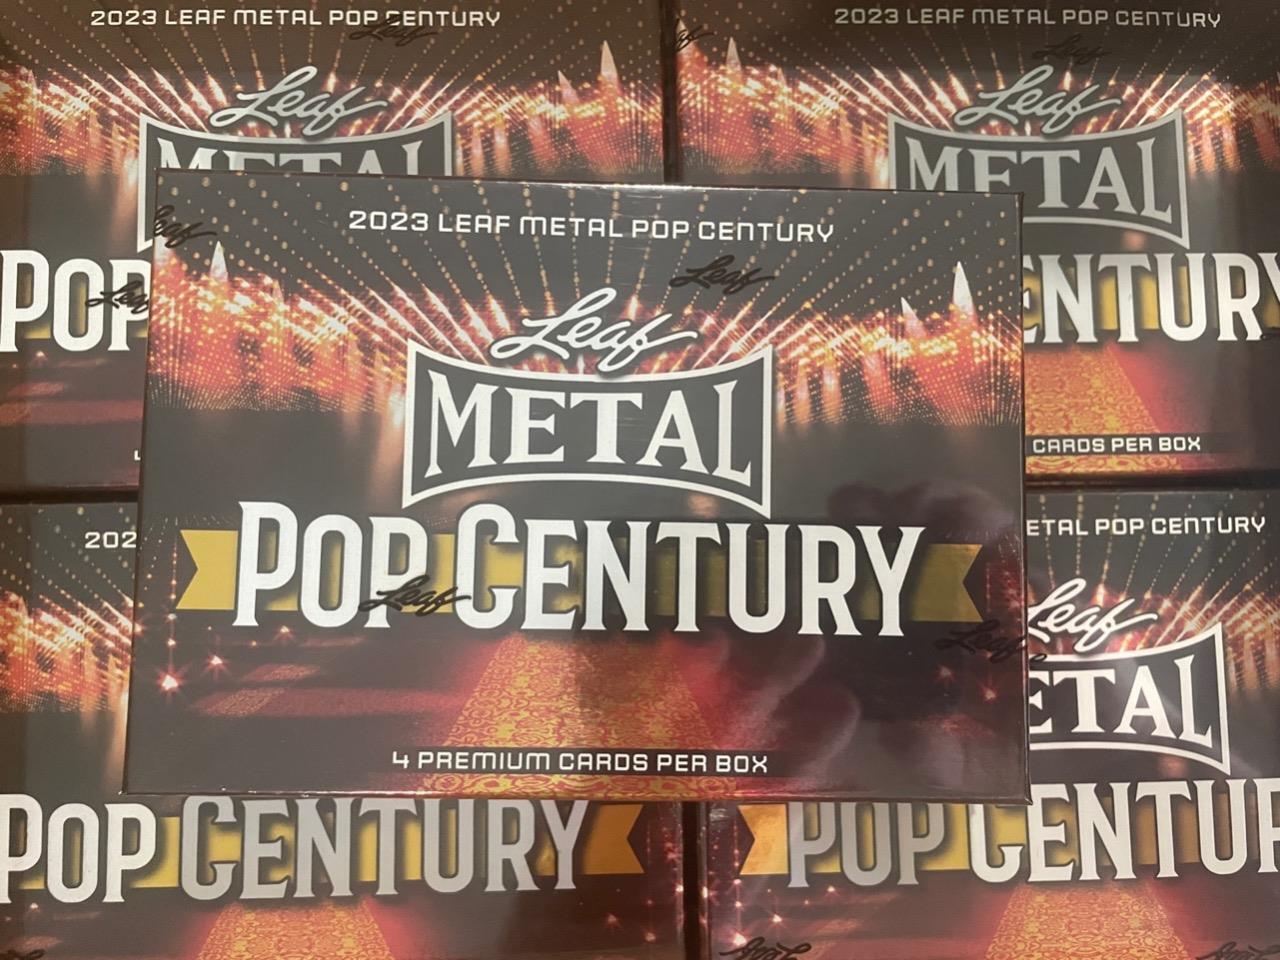 2023 Leaf Metal Pop Century Factory Sealed Box 4 hits per box